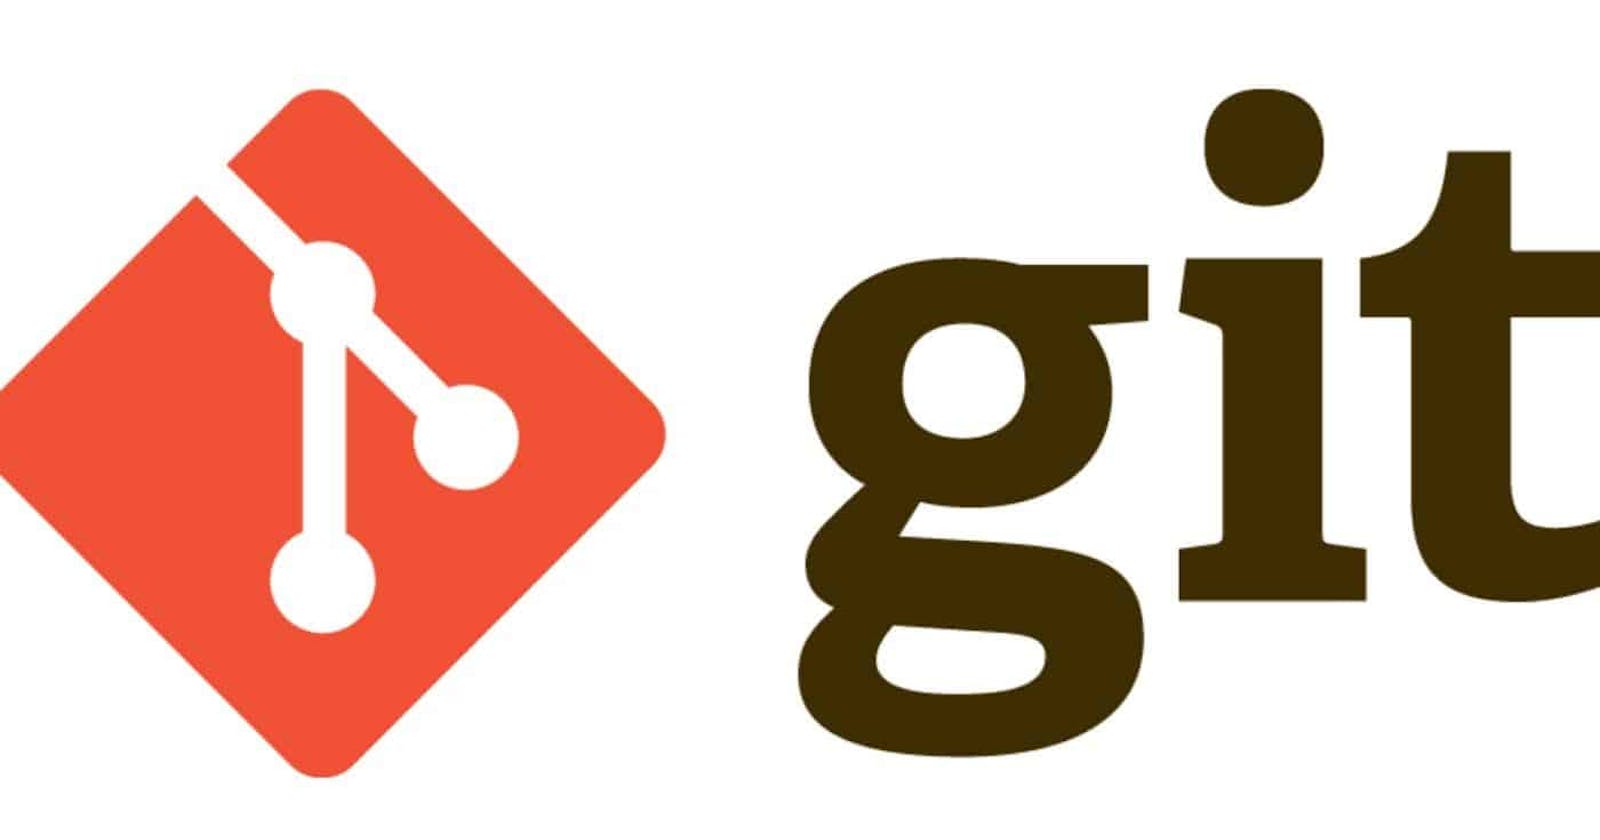 Git: Just Basics